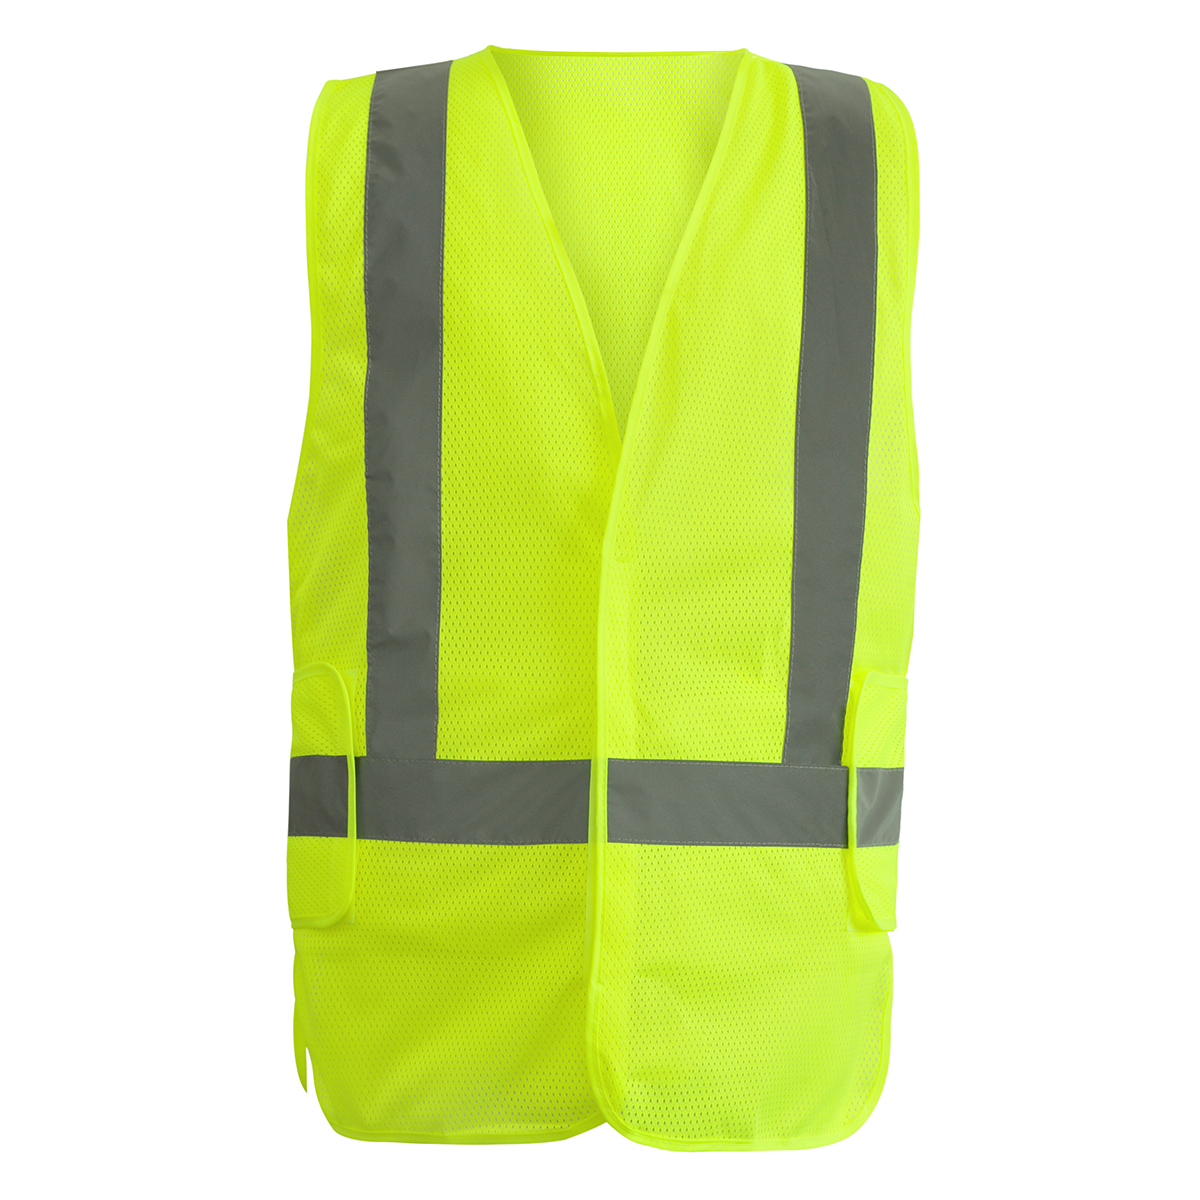 NYOrtho ANSI Class 2 Safety Vest